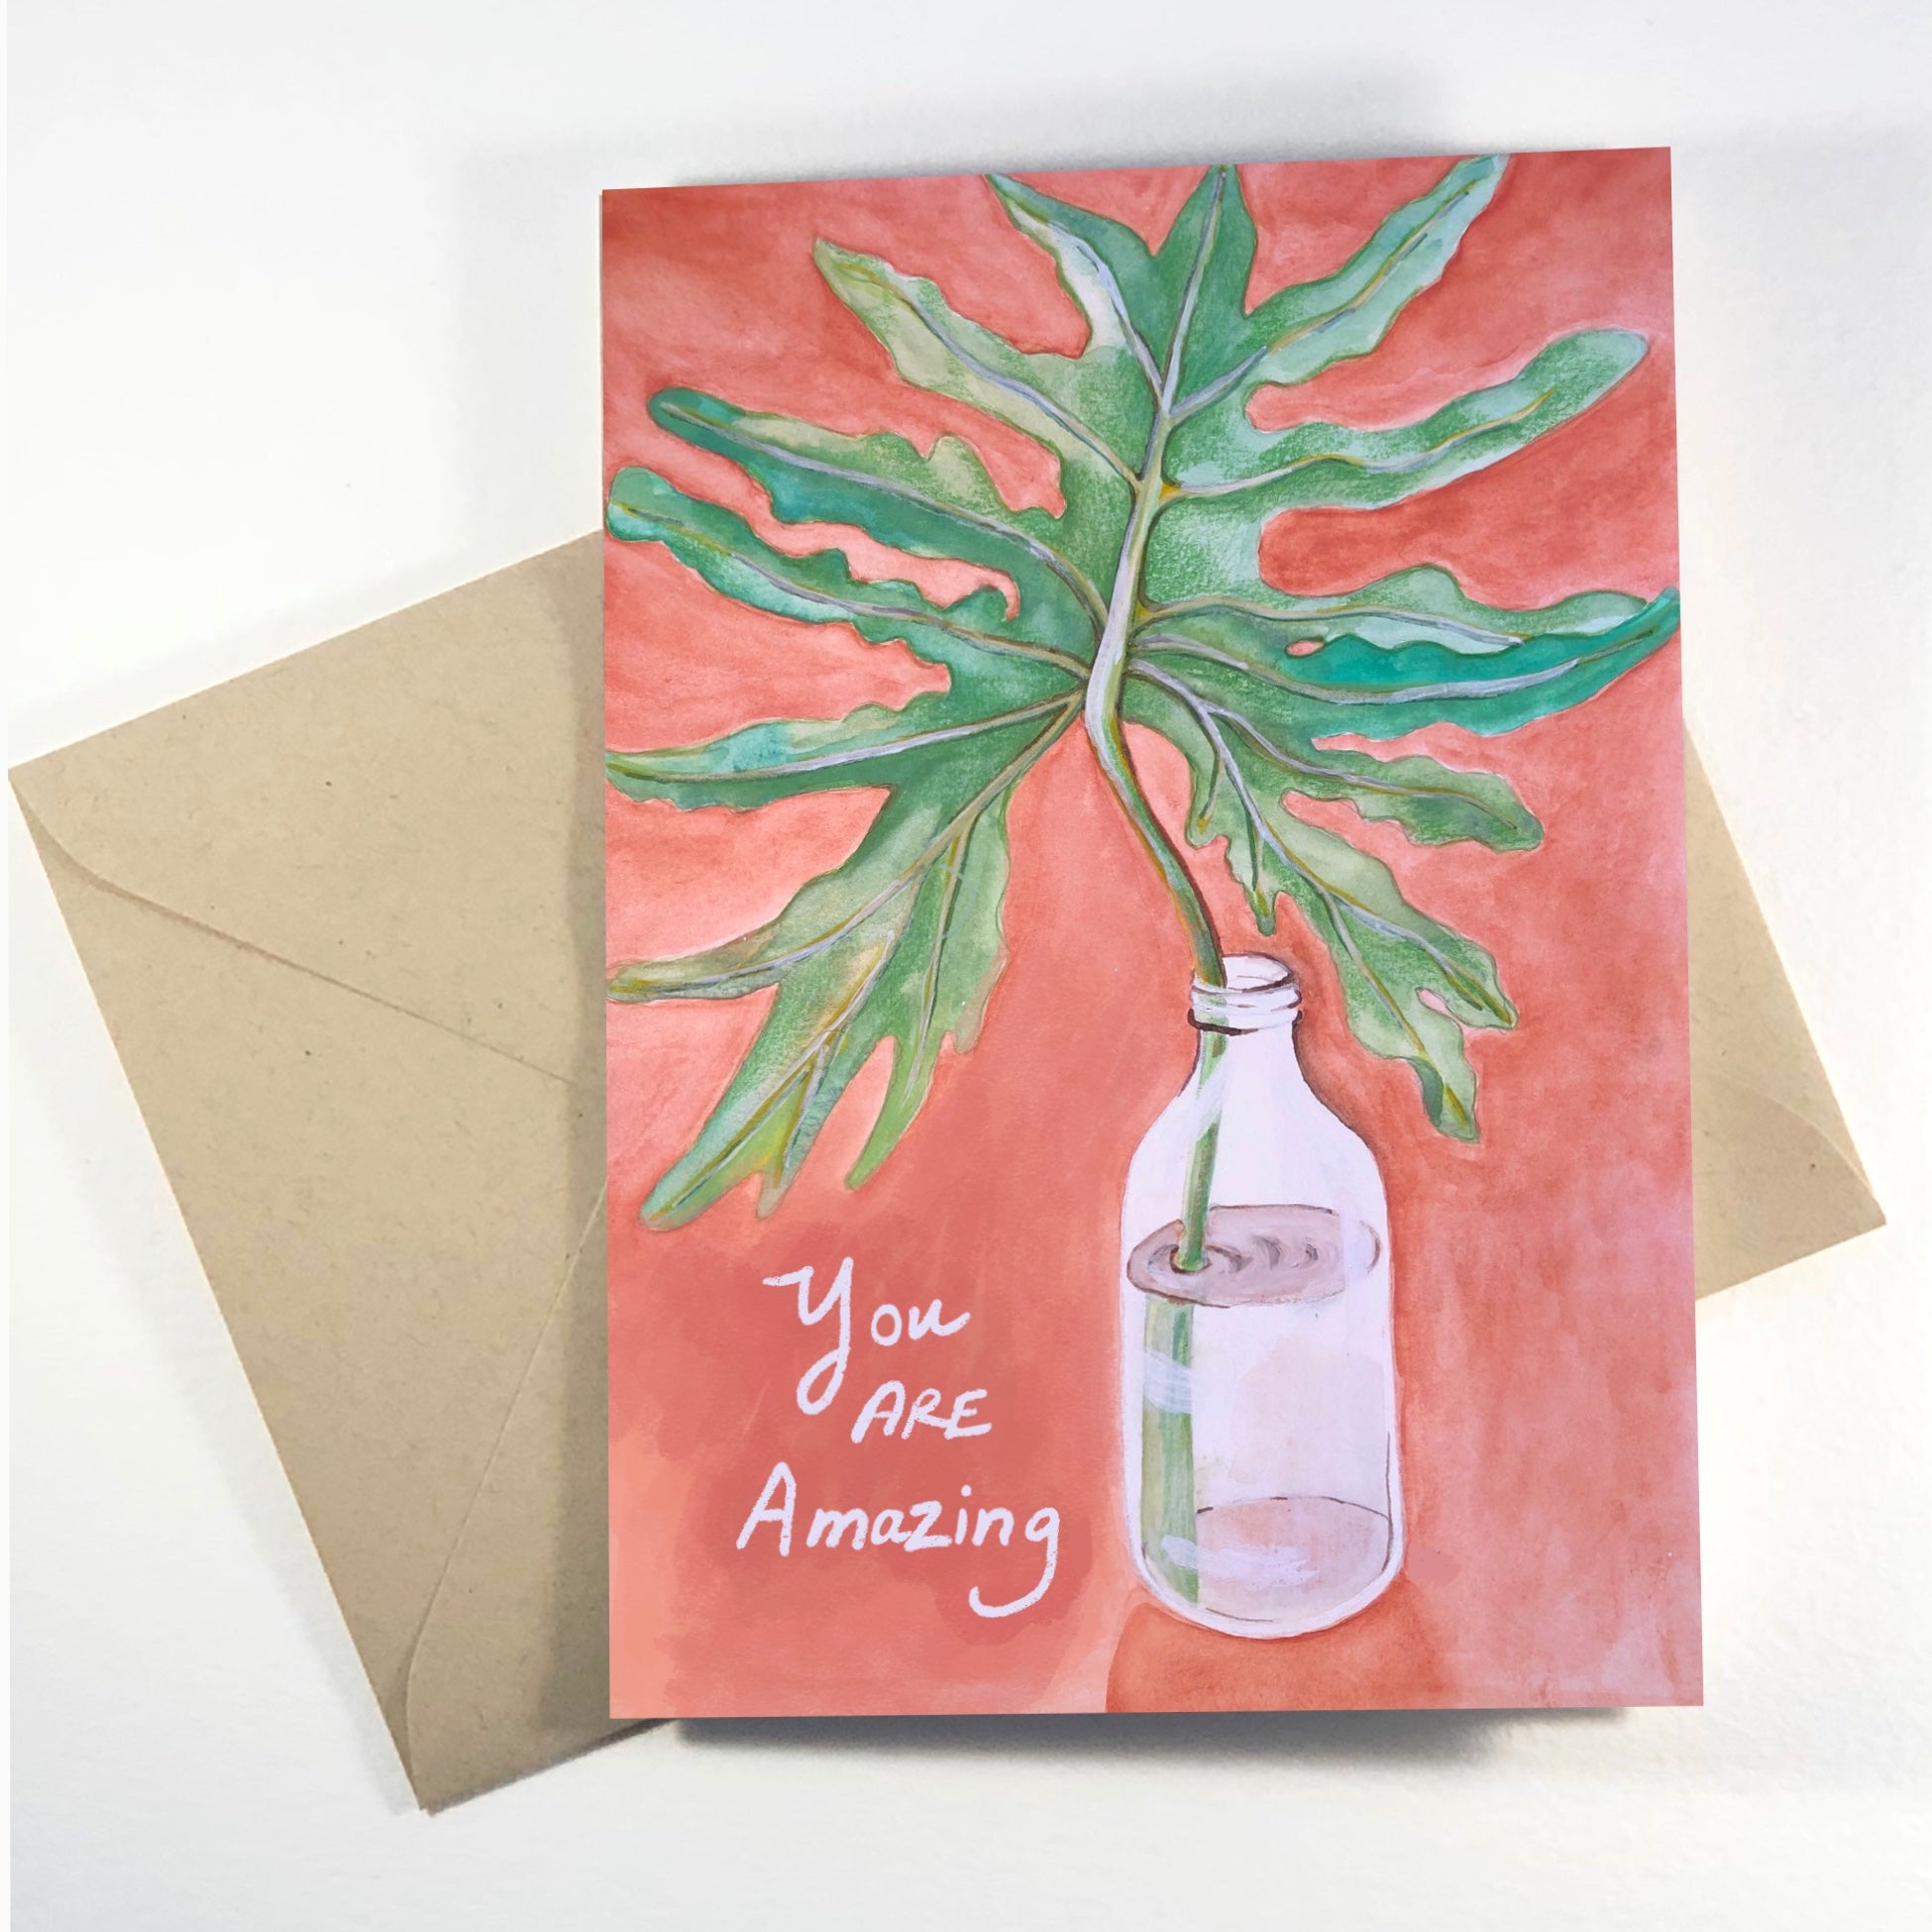 "Amazing" Greeting Card